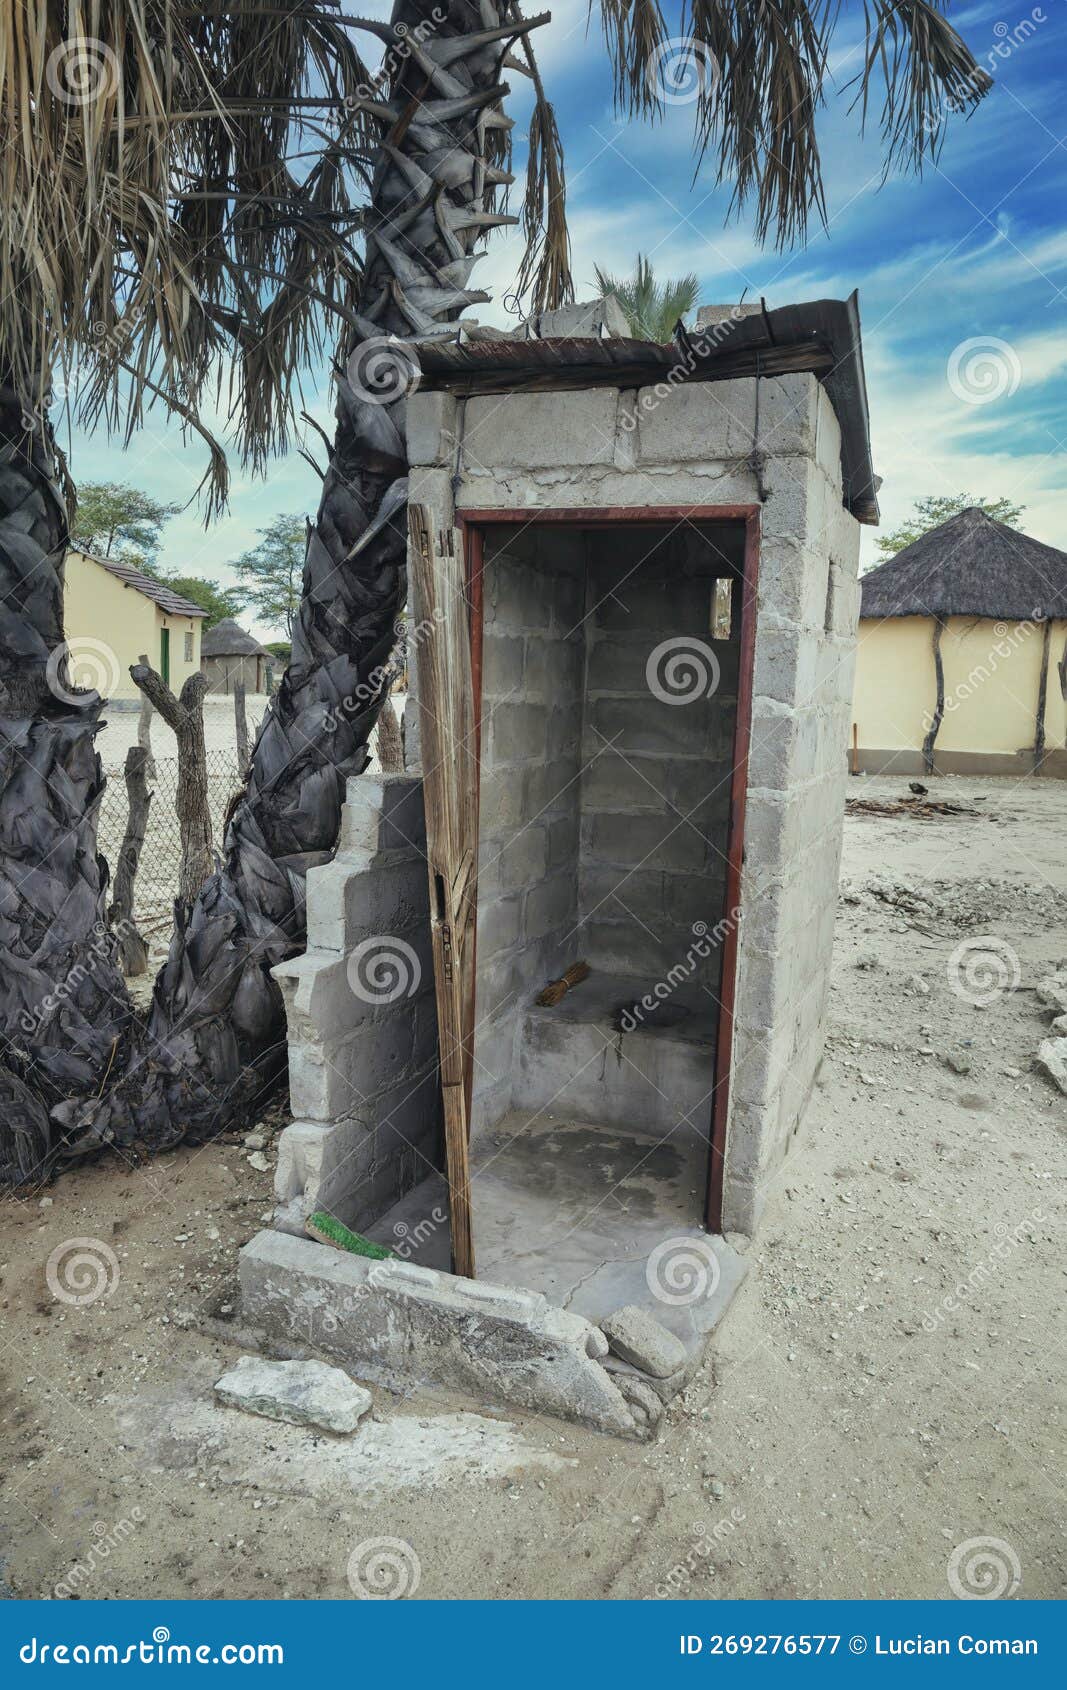 pit latrine